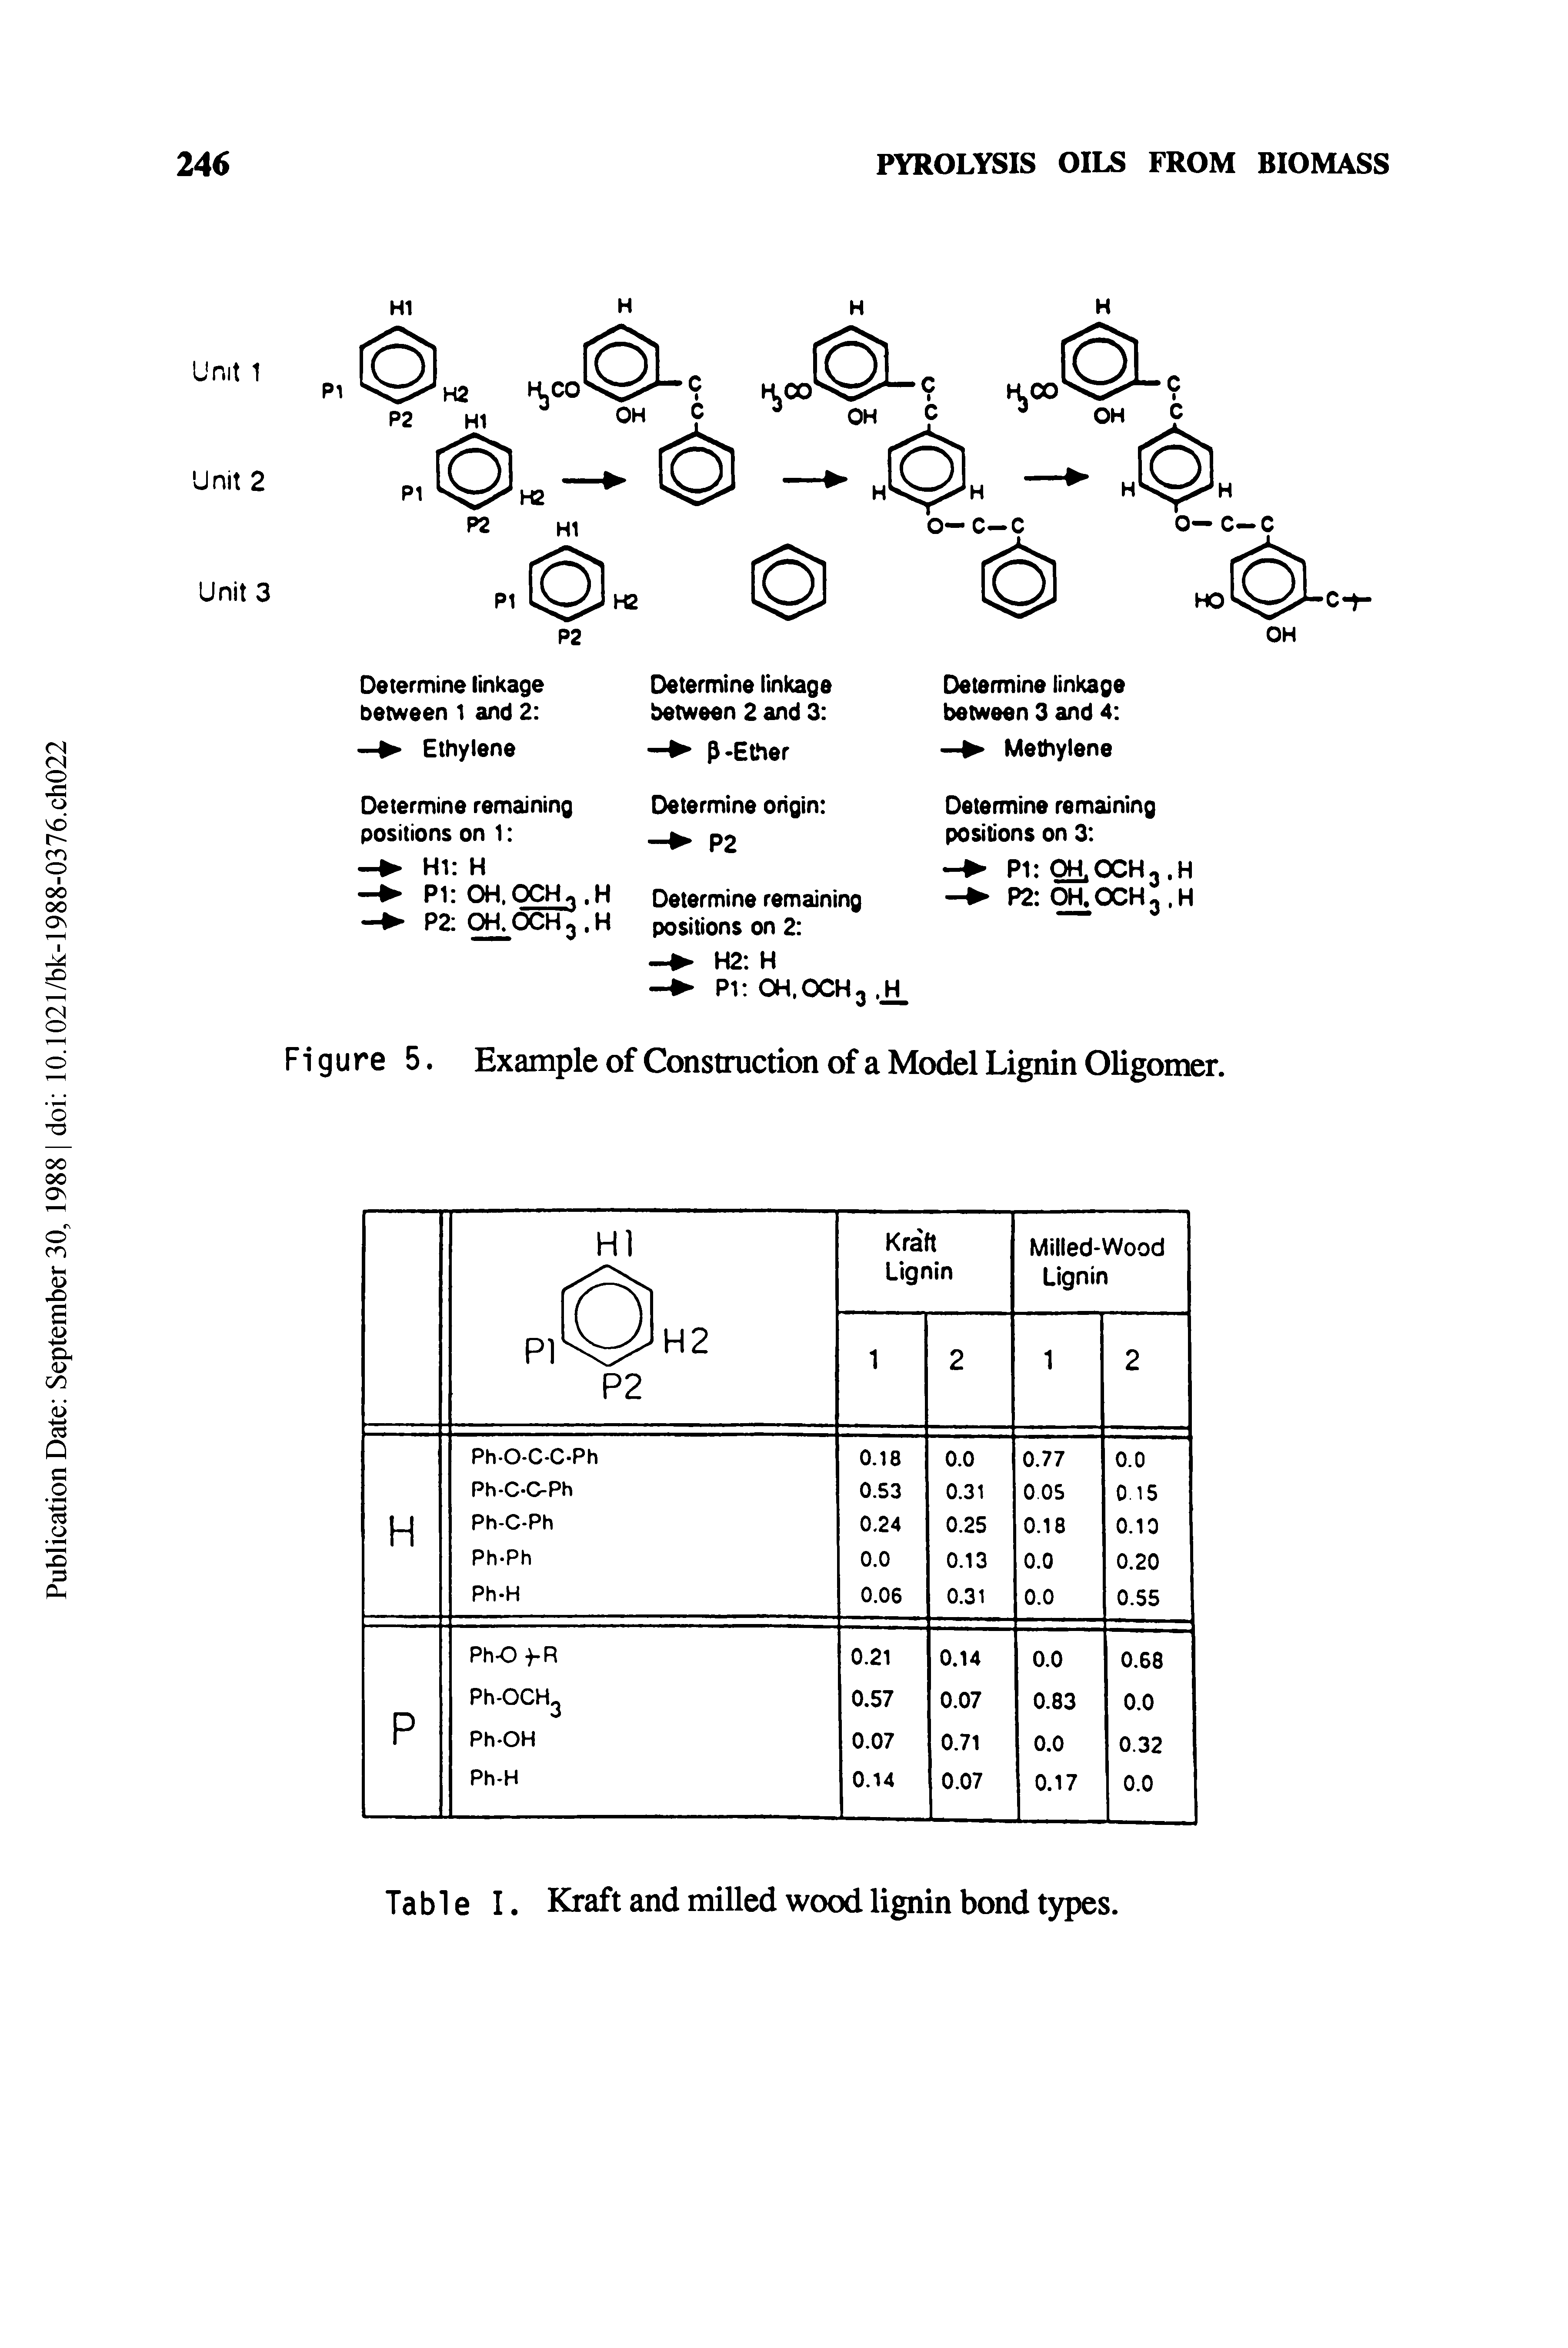 Table I. Kraft and milled wood lignin bond types.